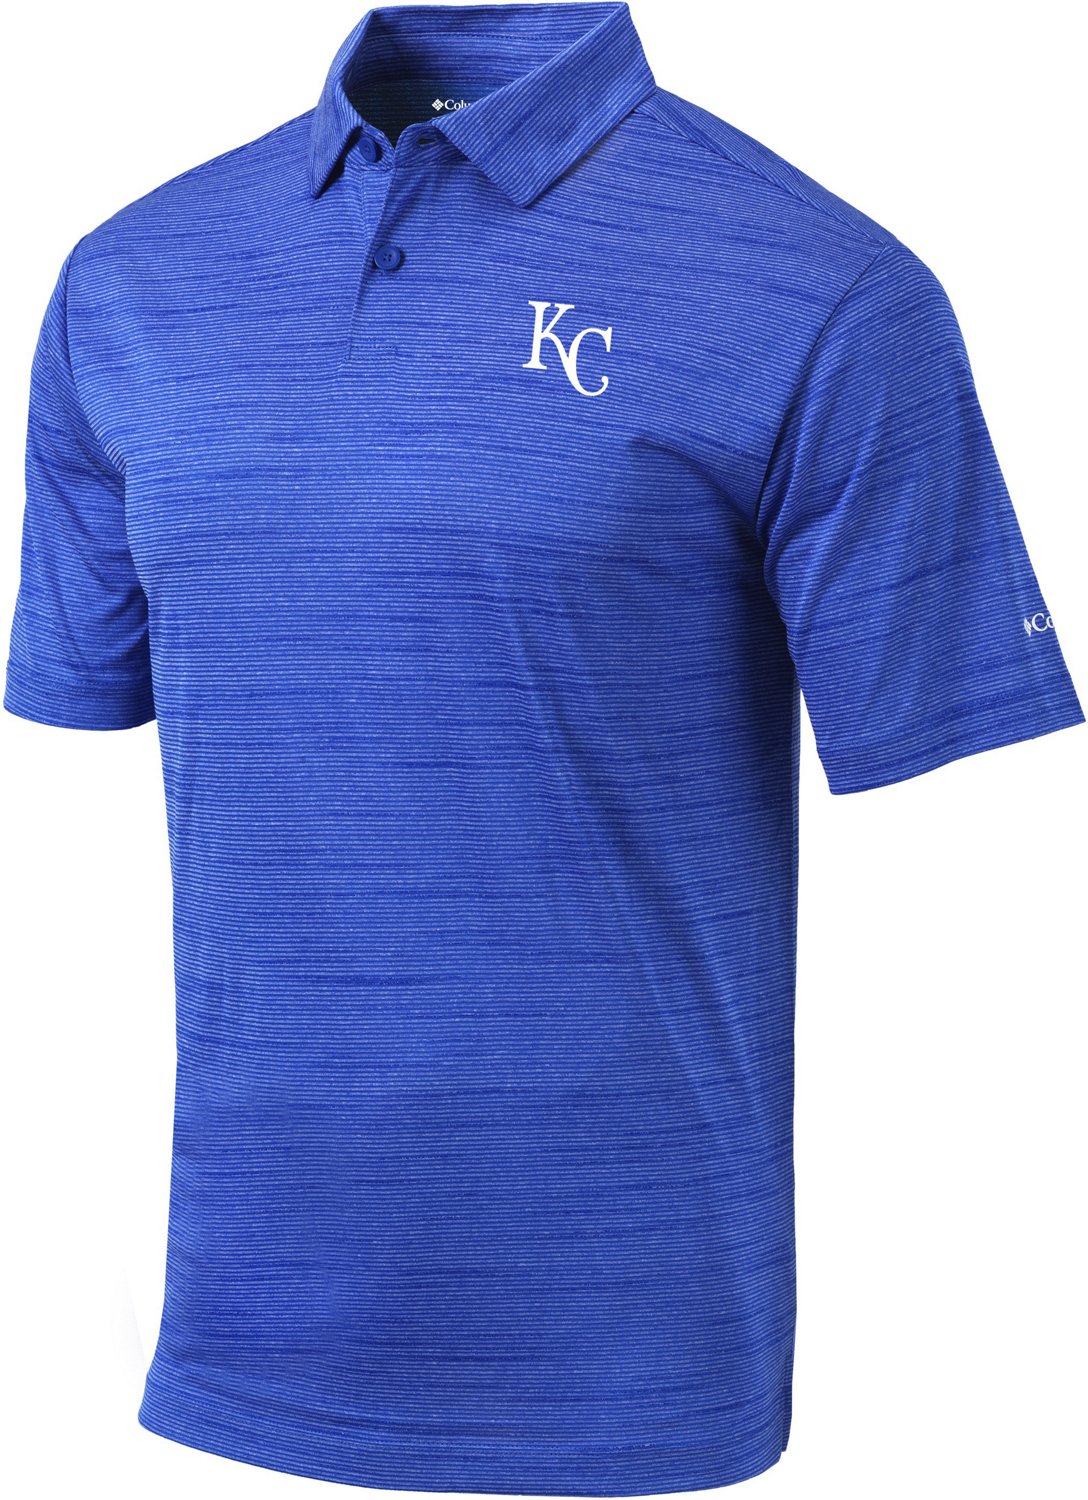 Columbia Sportswear Men's Kansas City Royals Set Polo Shirt